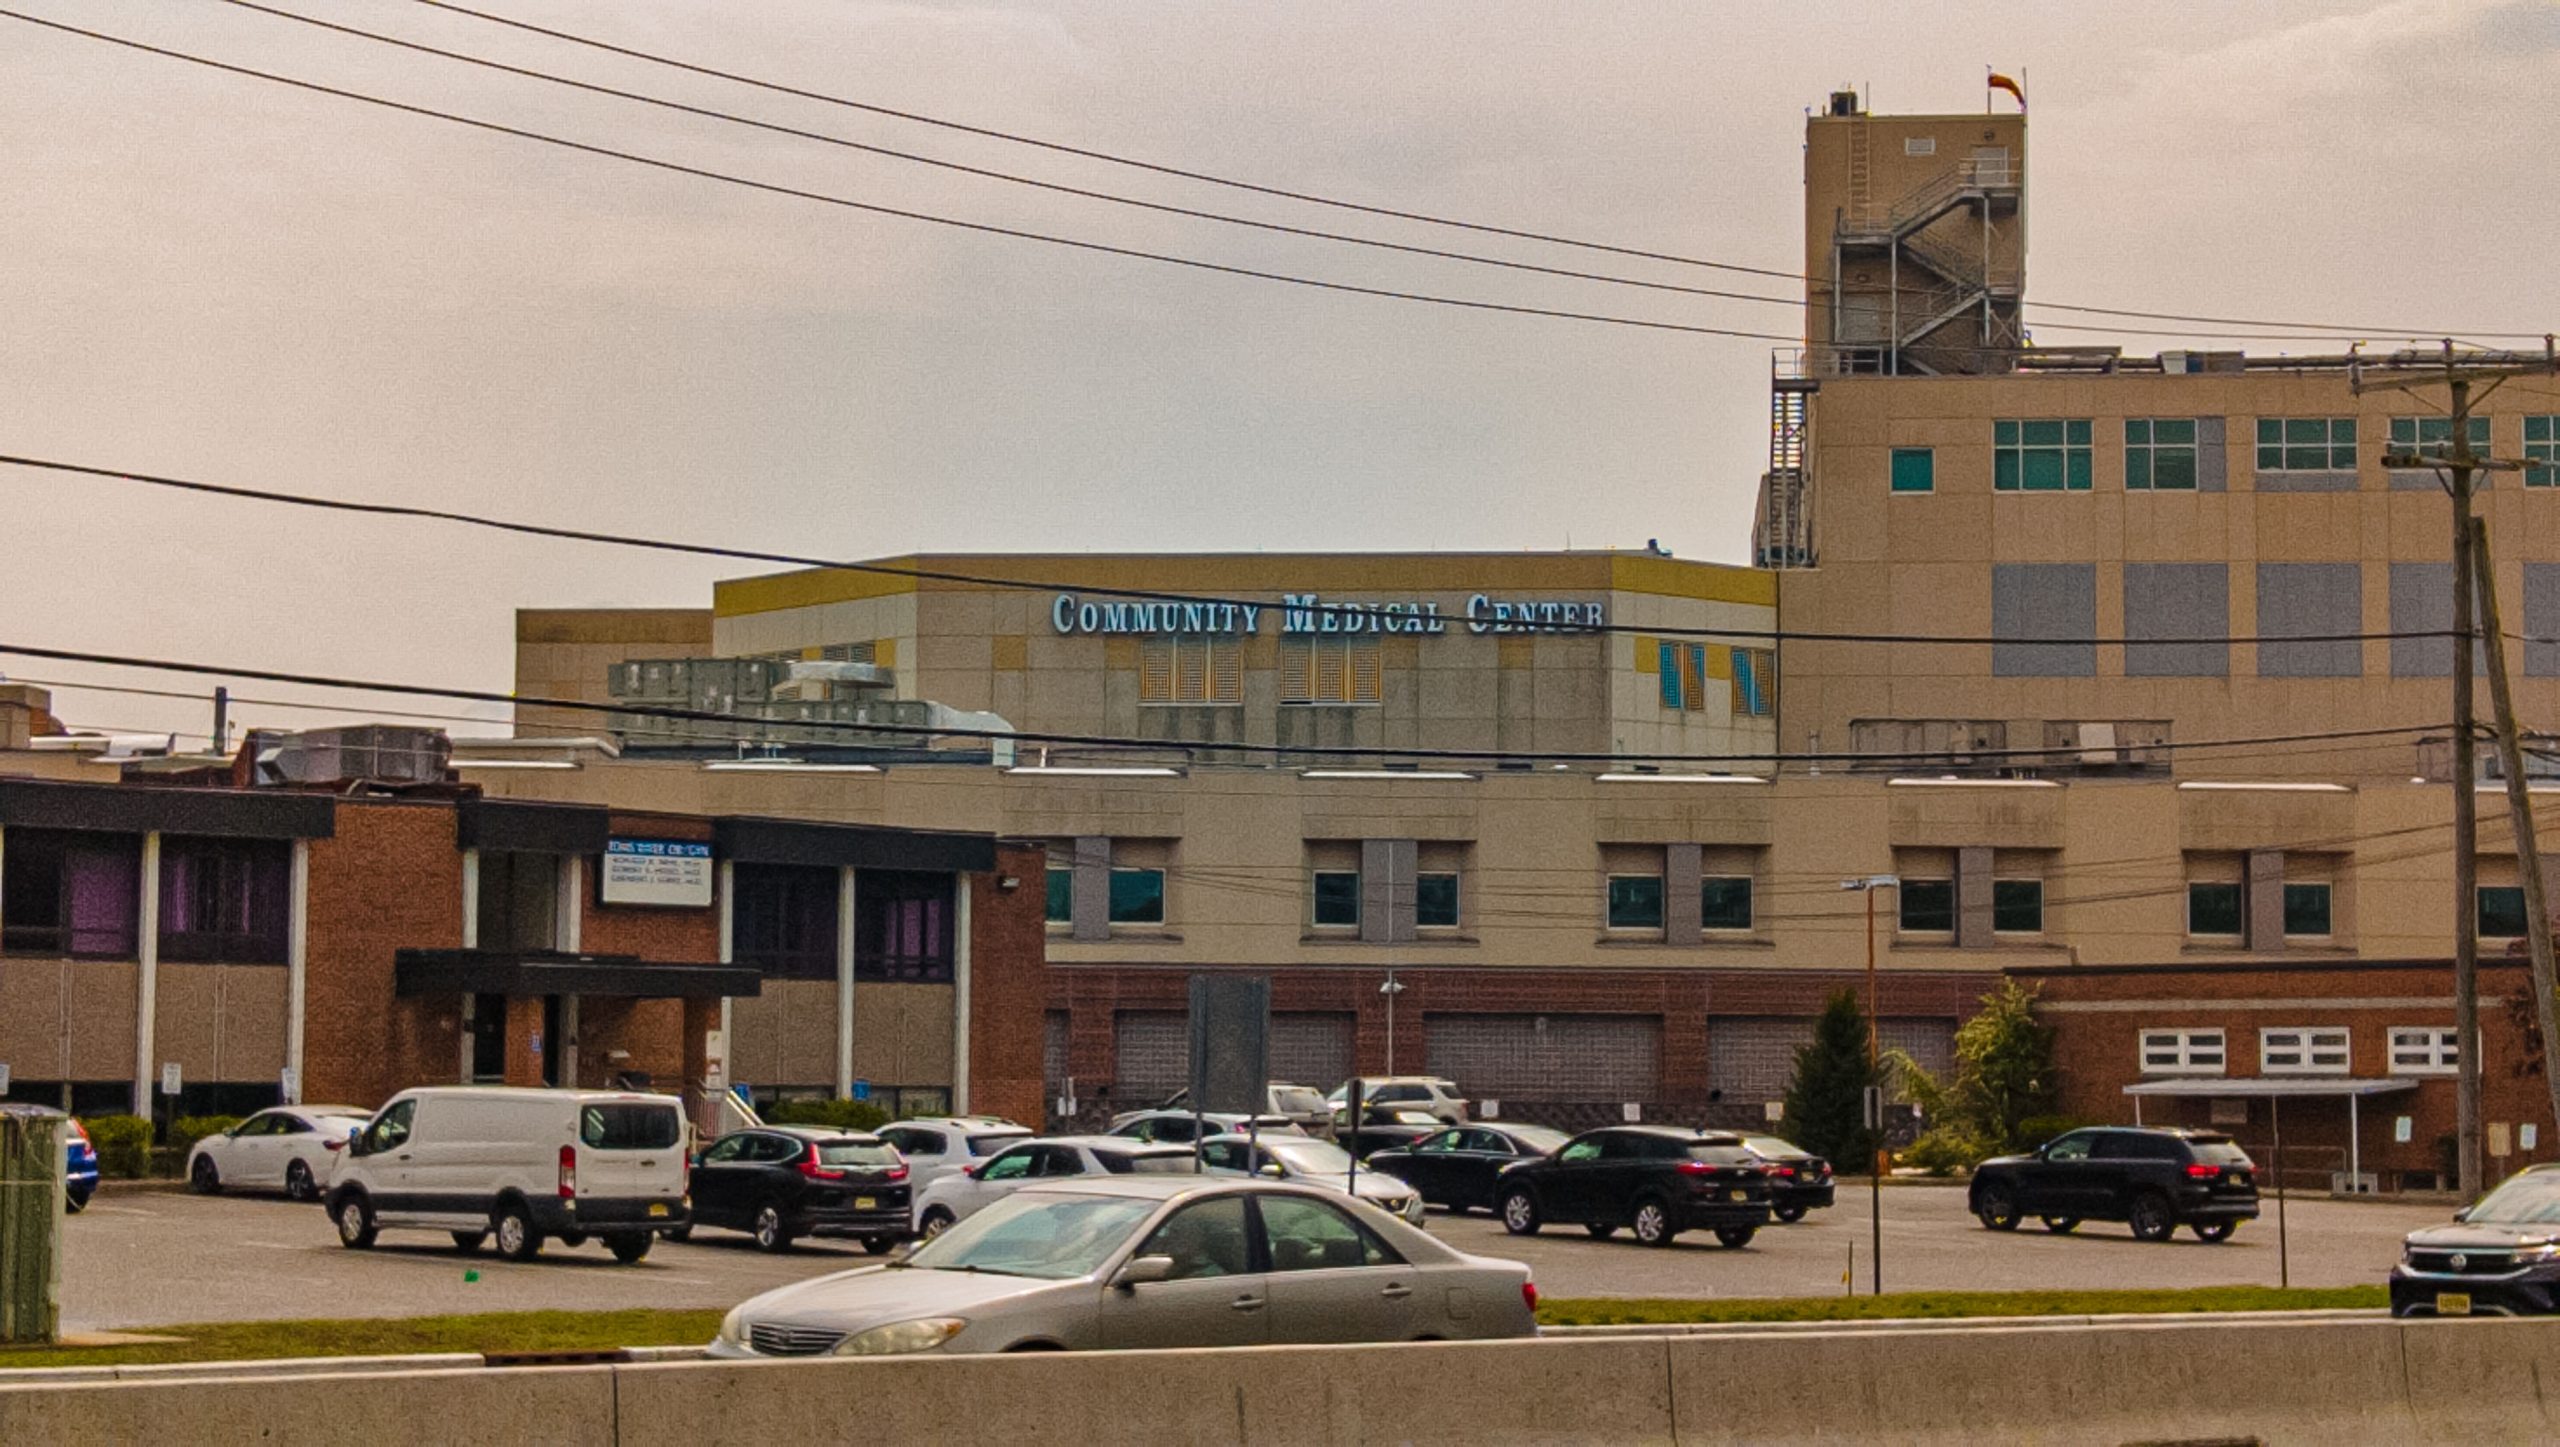 Community Medical Center, May 2022. (Photo: Daniel Nee)